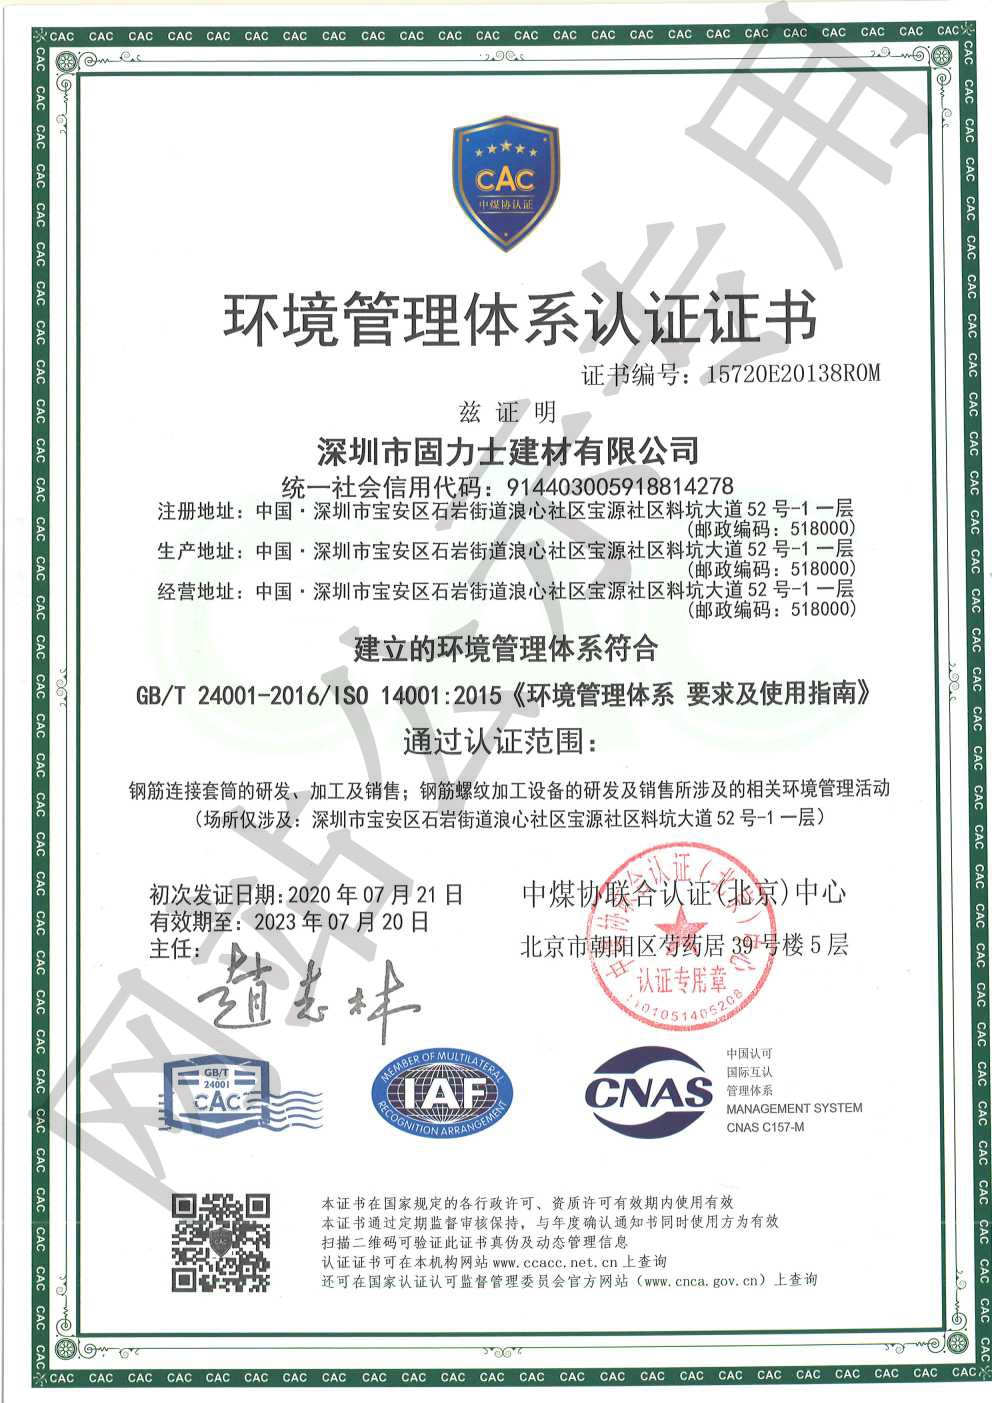 莲池ISO14001证书